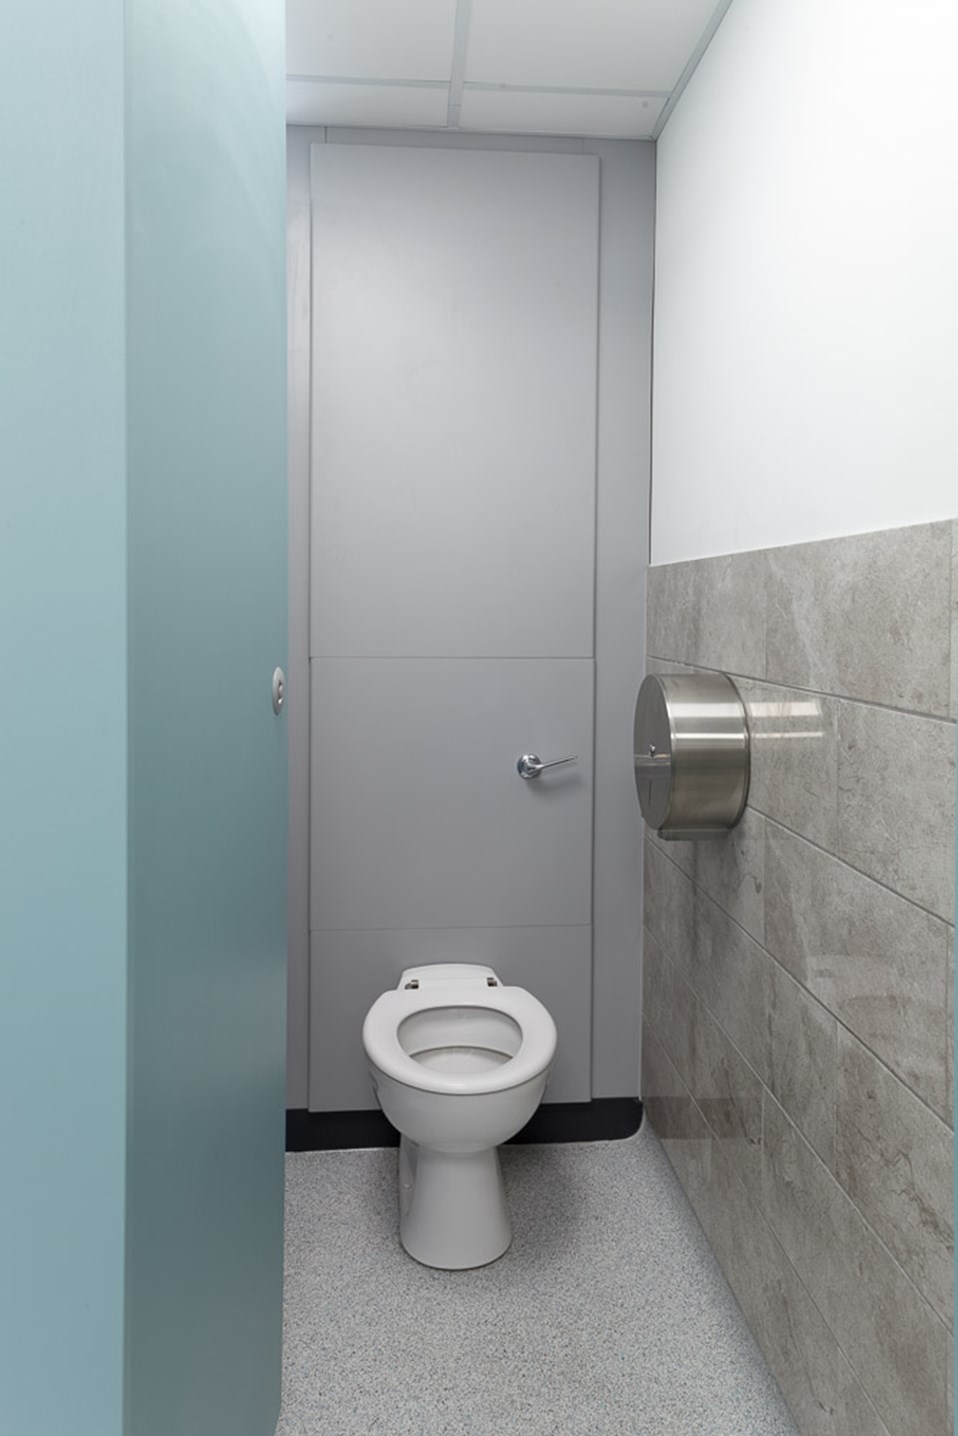 venesta-washrooms-toilet-cubicles-award-vepps-ips-preplumbed-washroom-panelling-wc-royal-grammar-school1